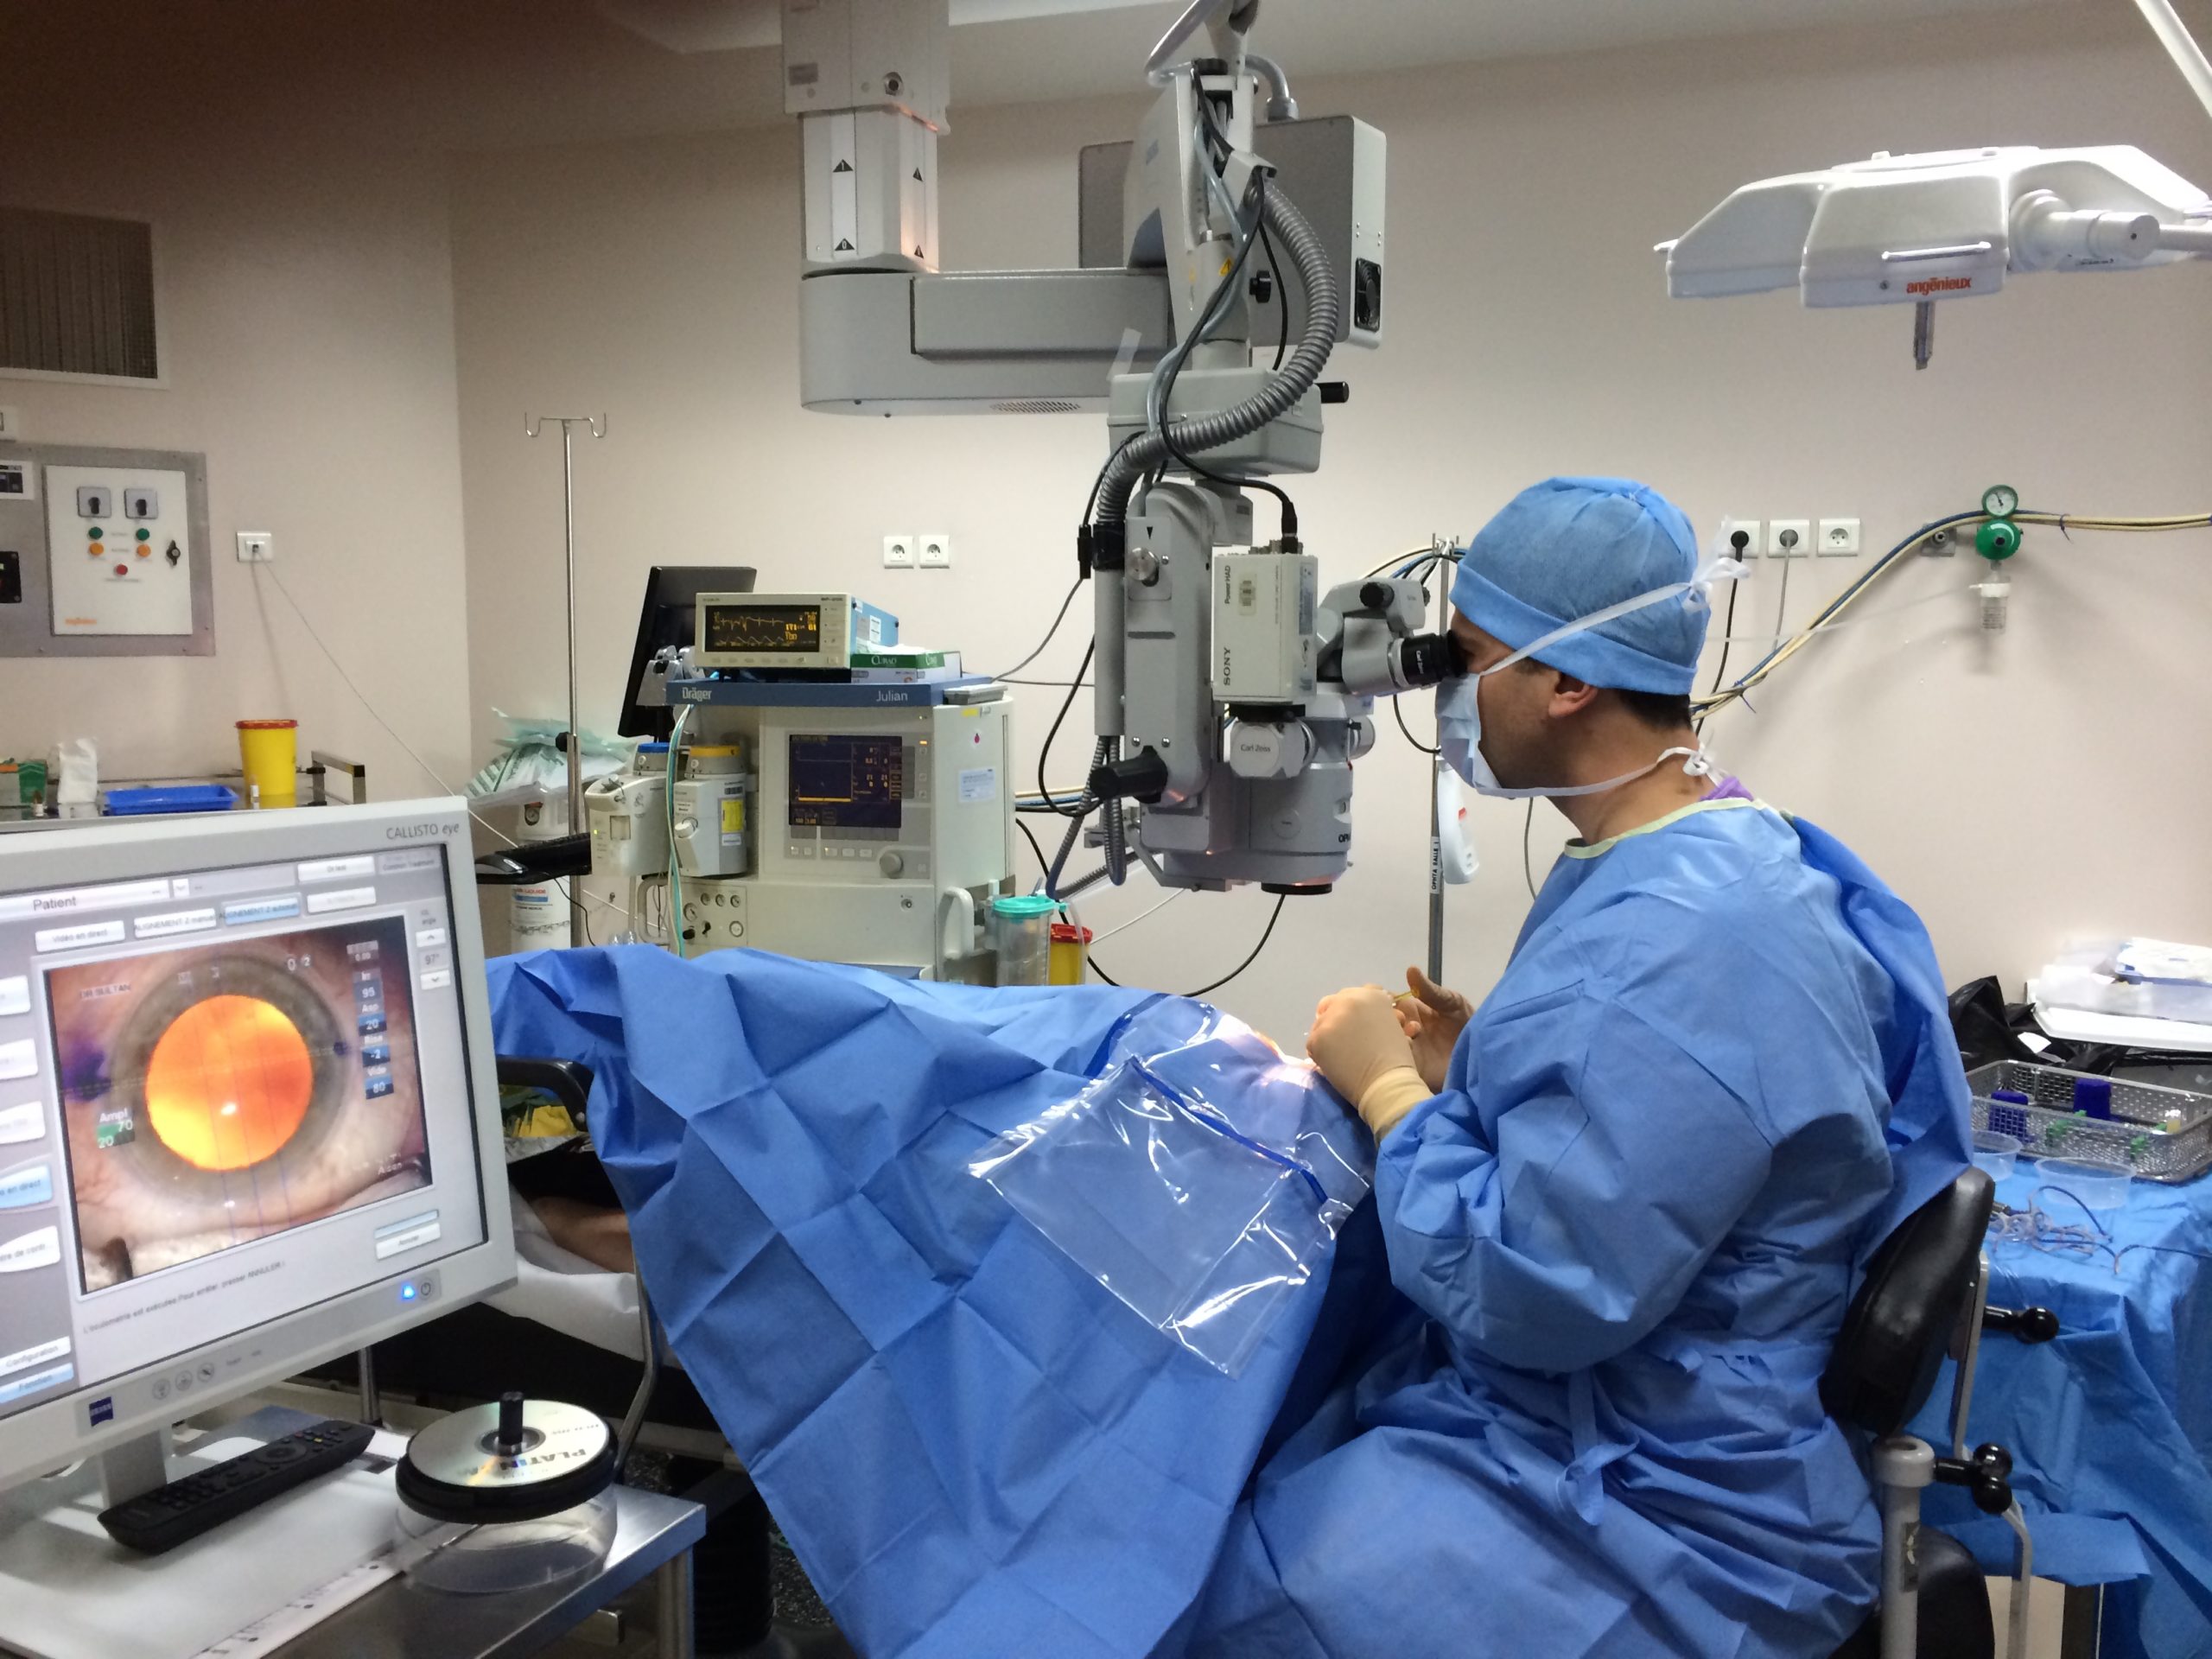 chirurgie de la cataracte